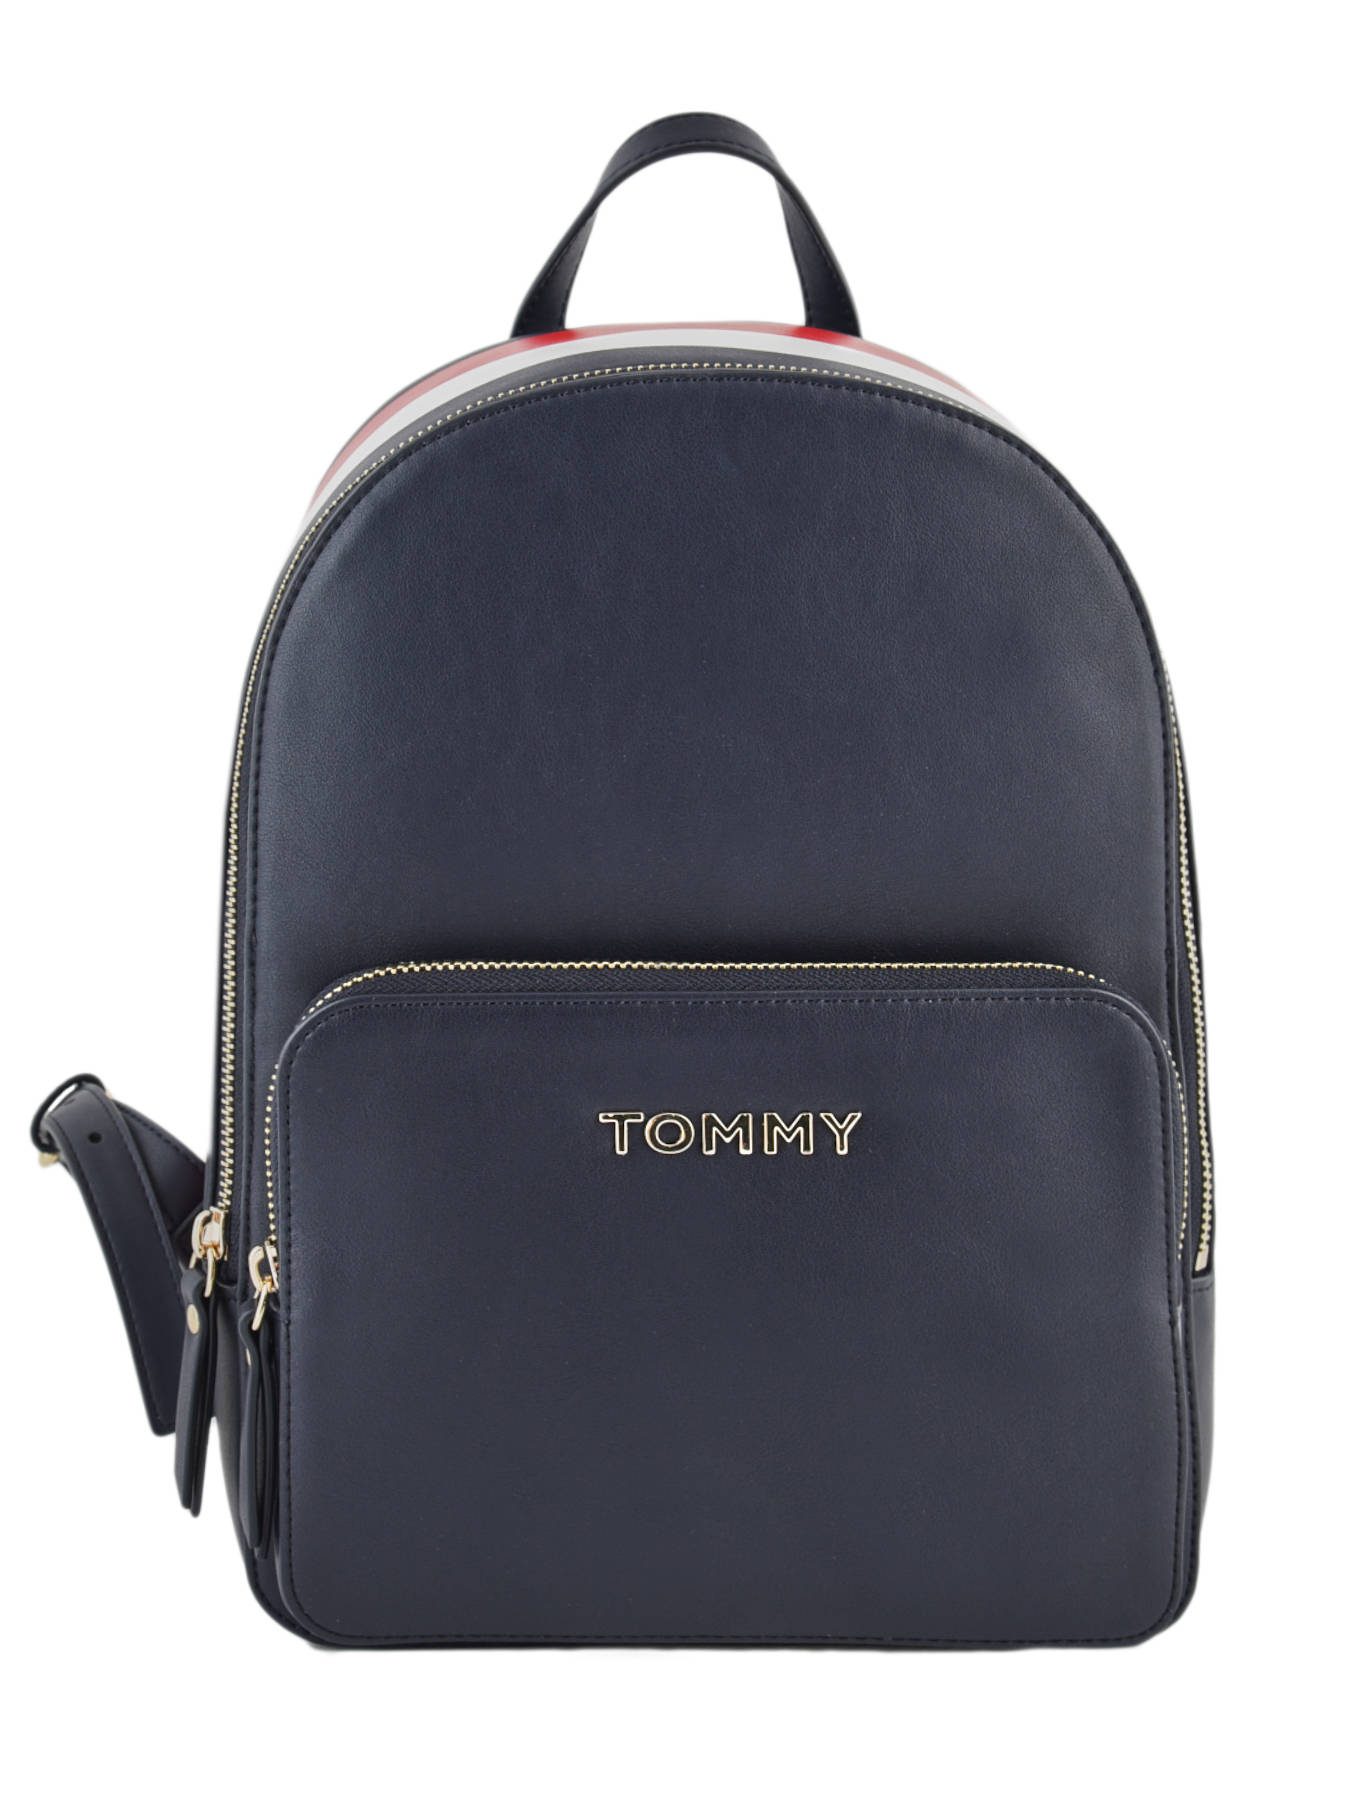 tommy hilfiger backpack price